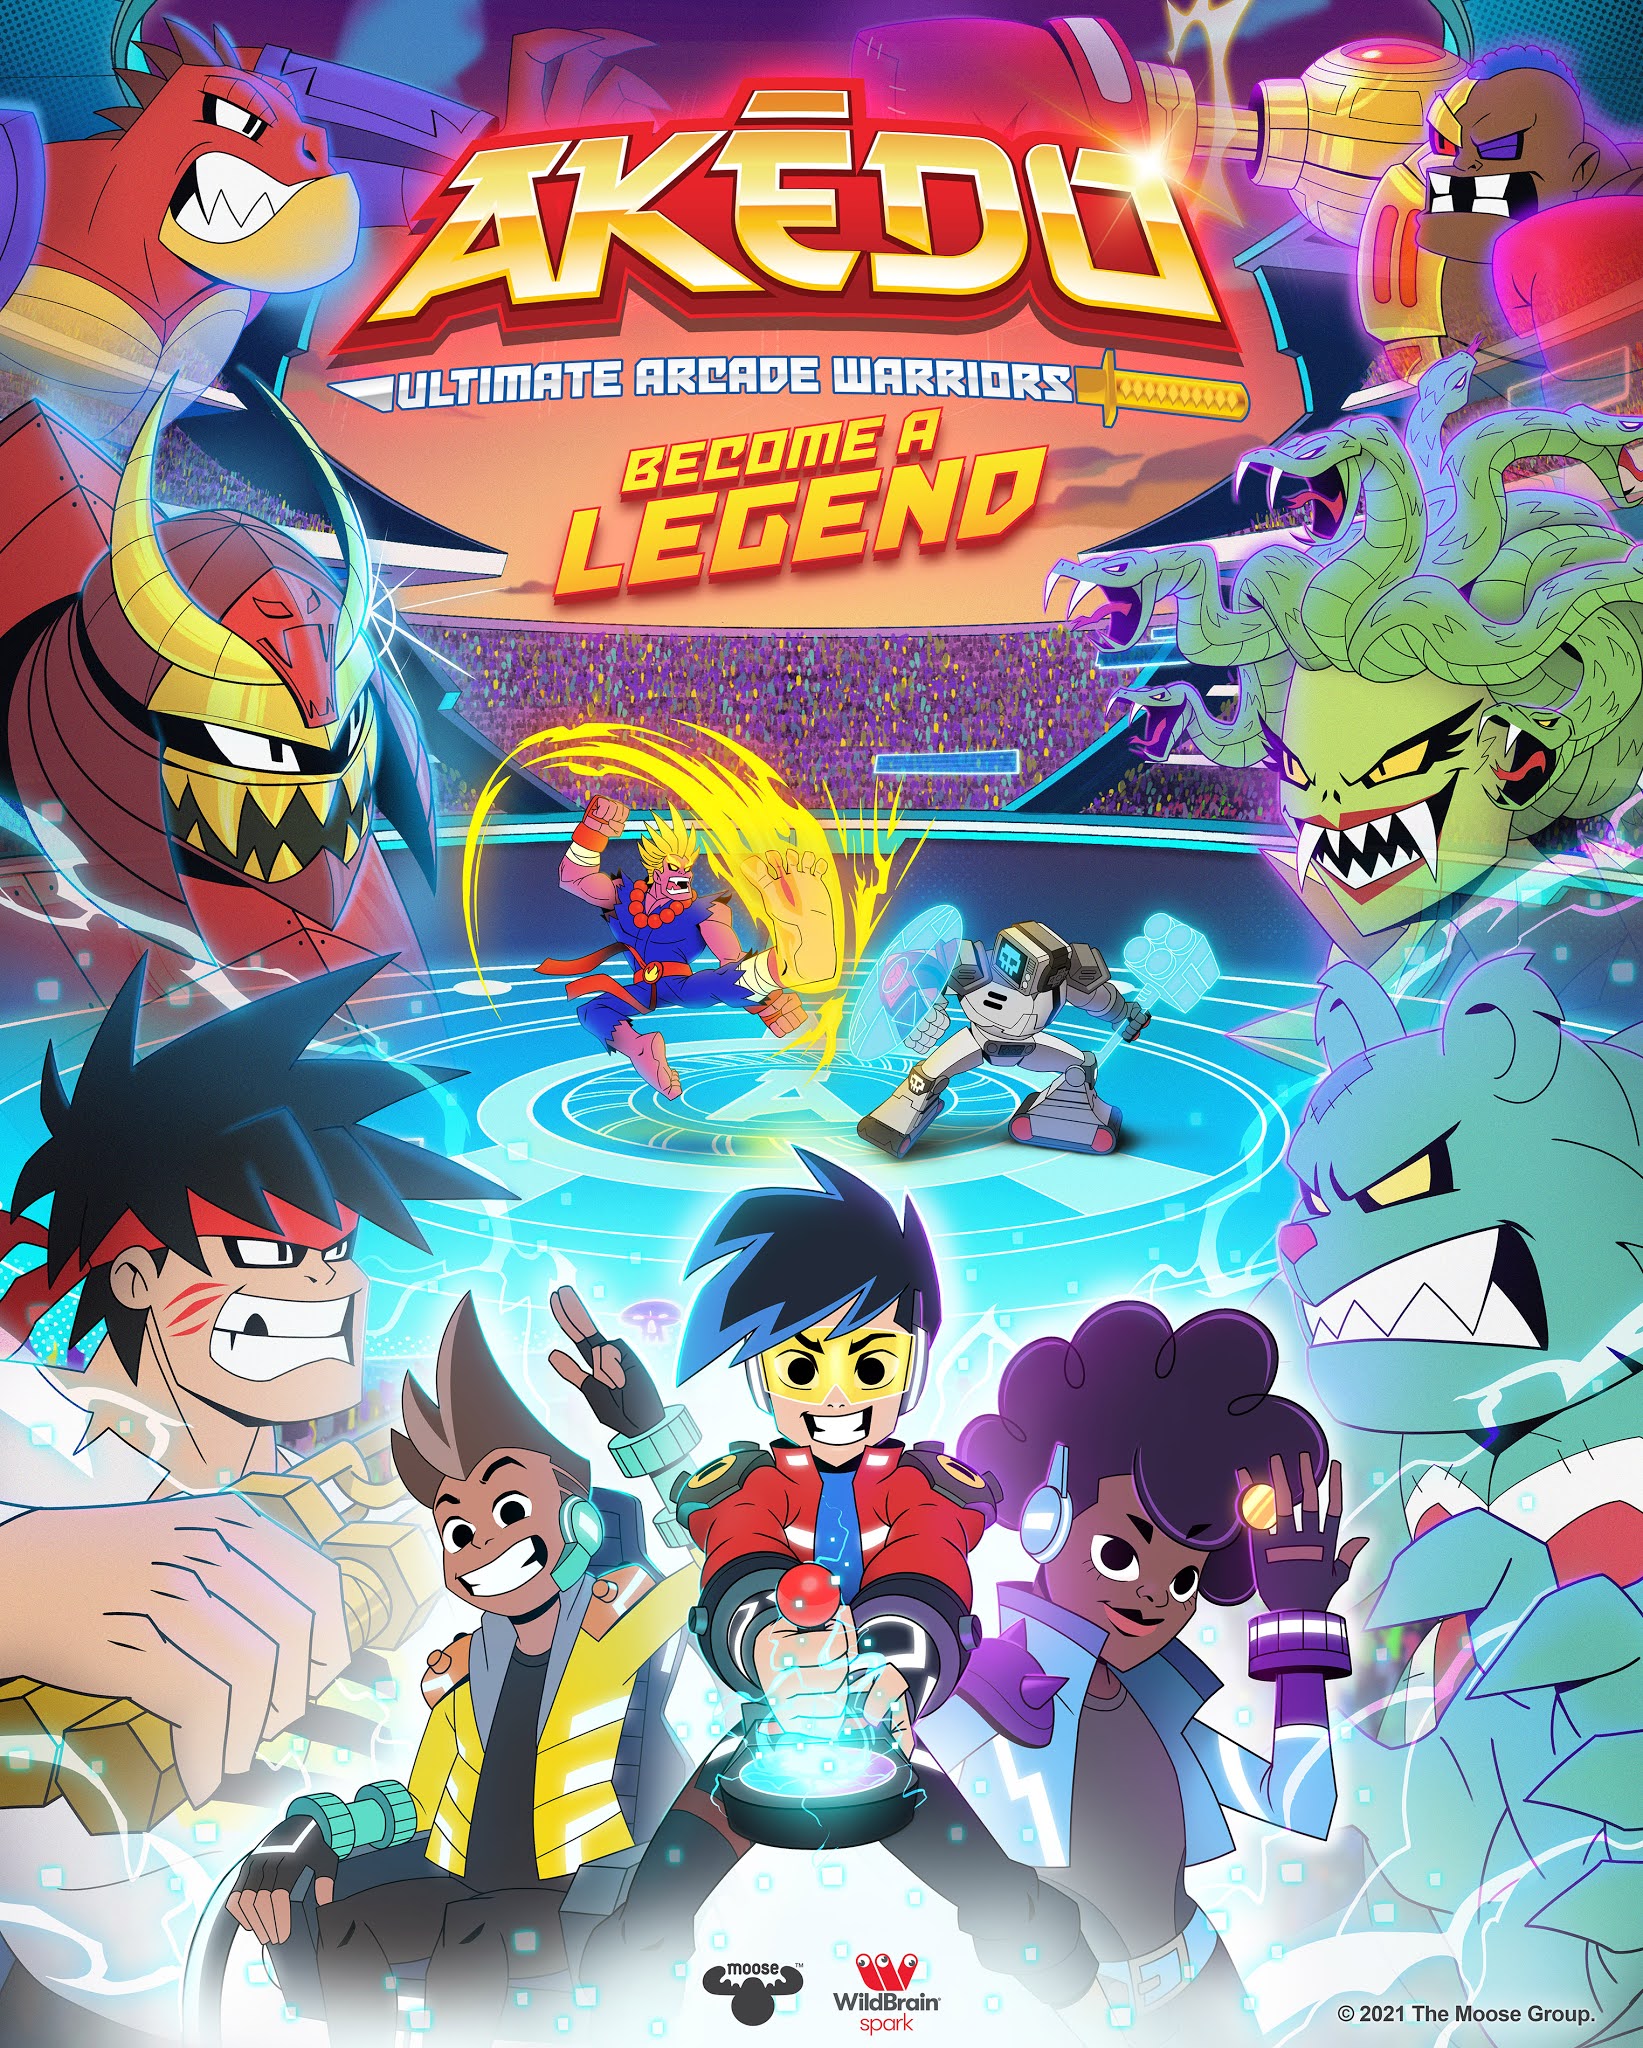 Nickelodeon Legends Of Akedo Mini Battle